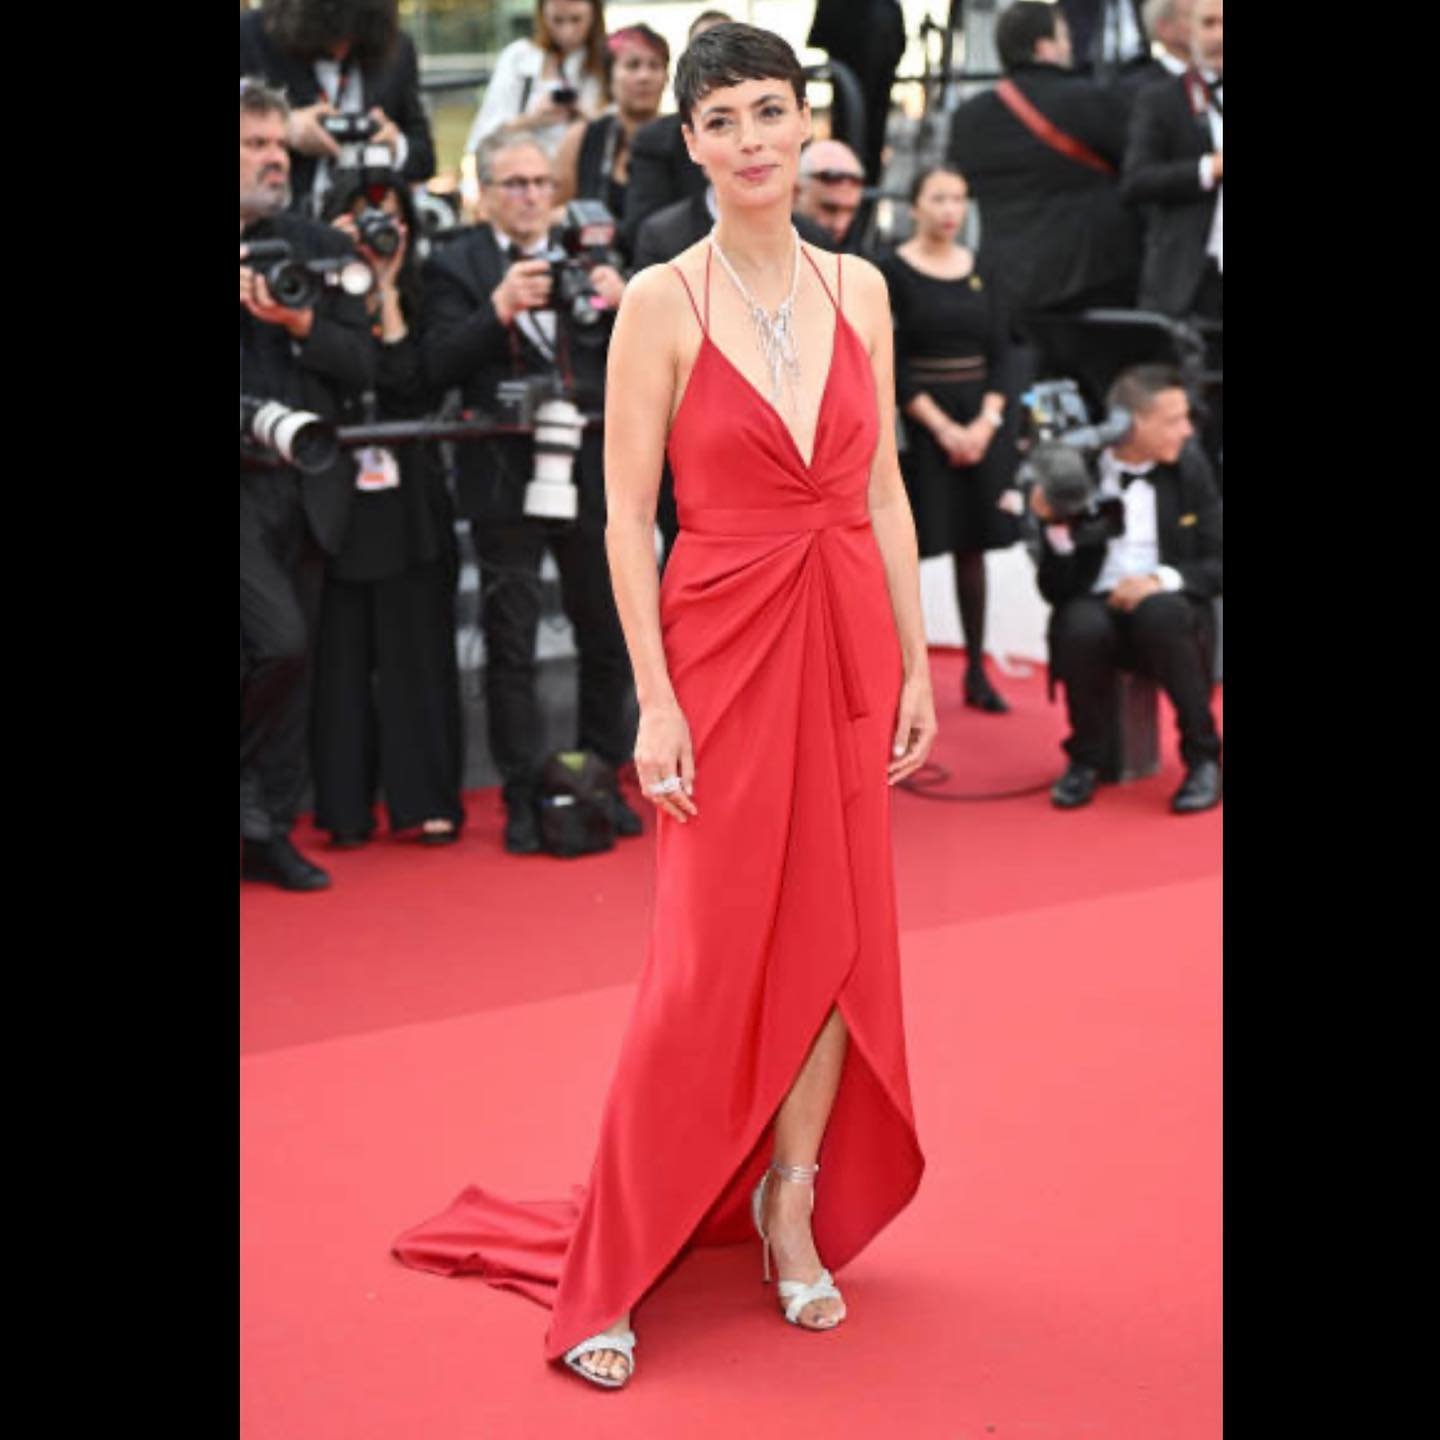 B&eacute;r&eacute;nice B&eacute;jo rocking the red carpet in red Couture gown @festivaldecannes #berenicebejo #alexismabille #styledby @sabrinariccardistylist @alexismabille #cannesfilmfestival